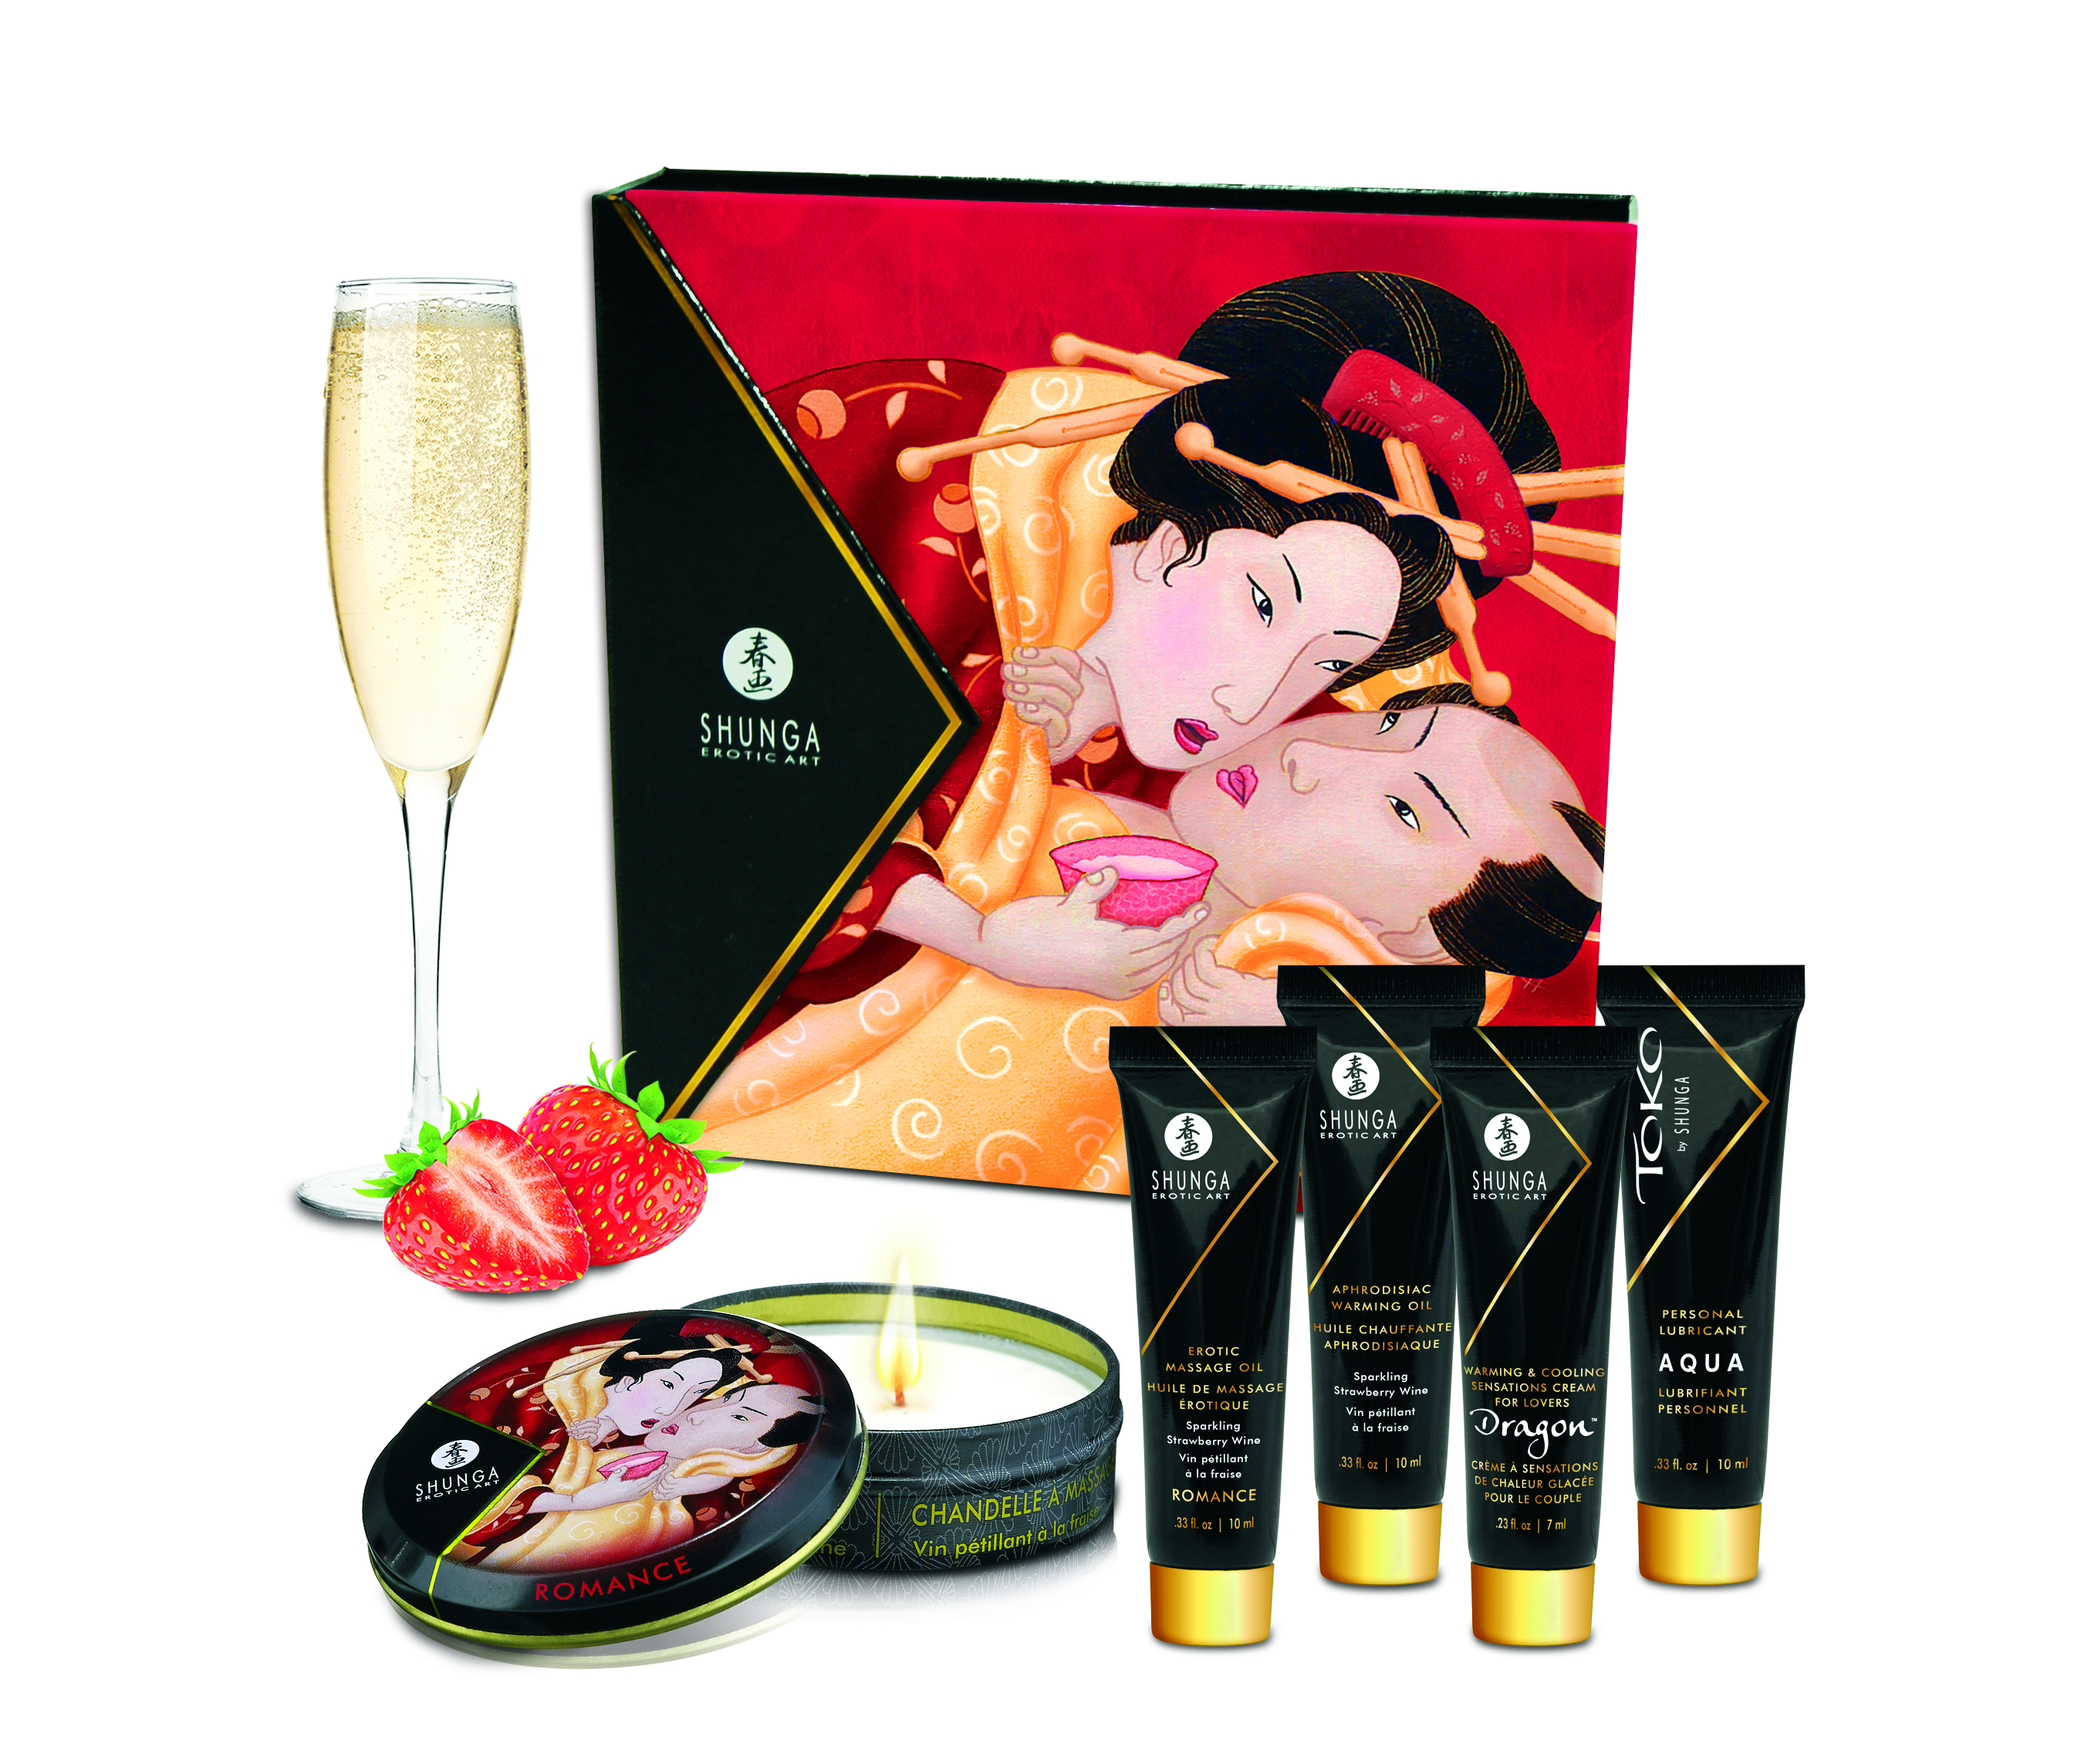 geishas secrets gift set sparkling strawberry wine 